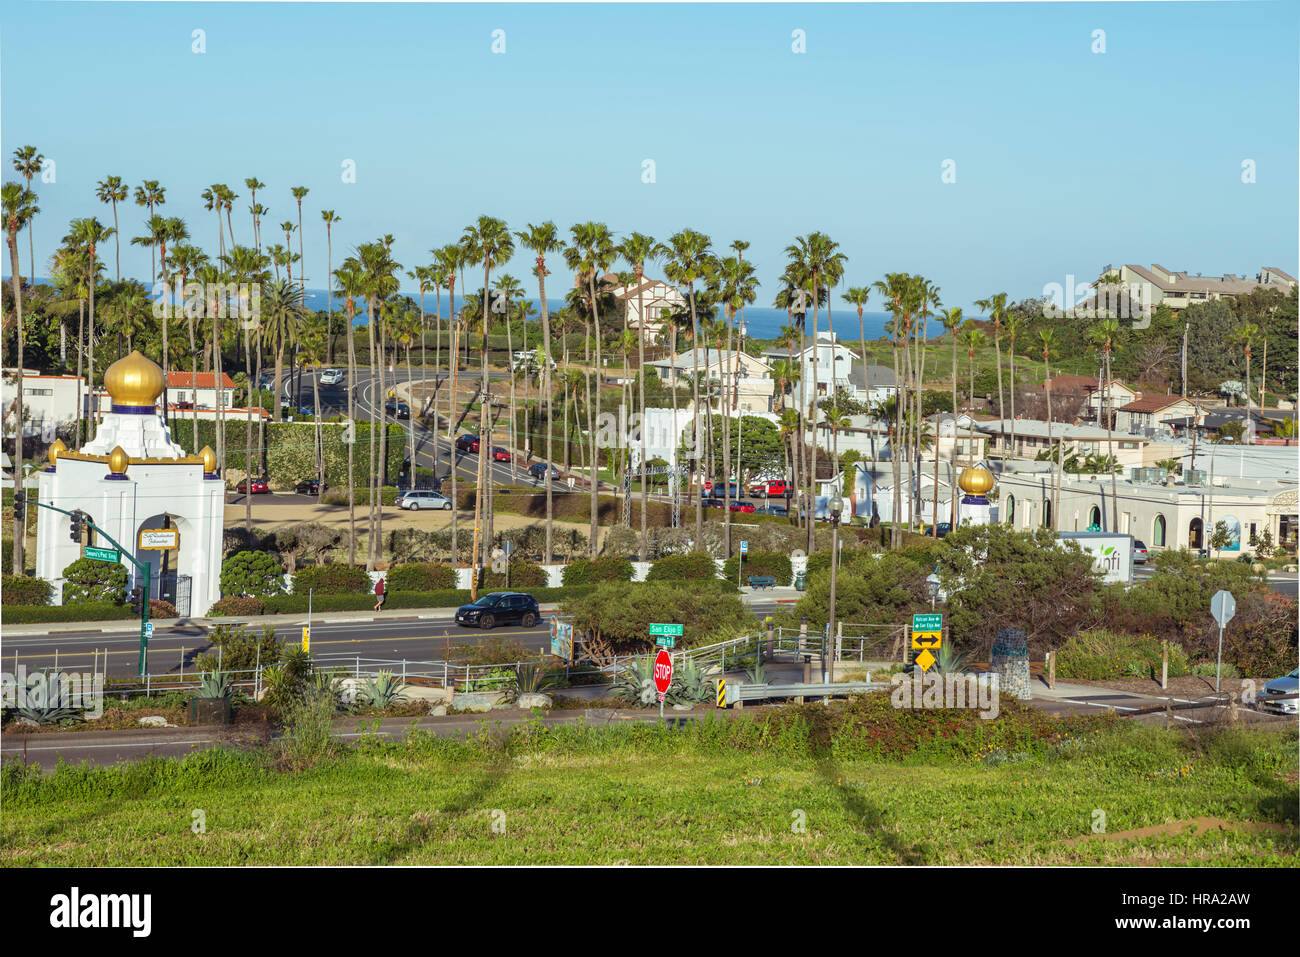 Looking down on the coastal city of Encinitas, California. Stock Photo